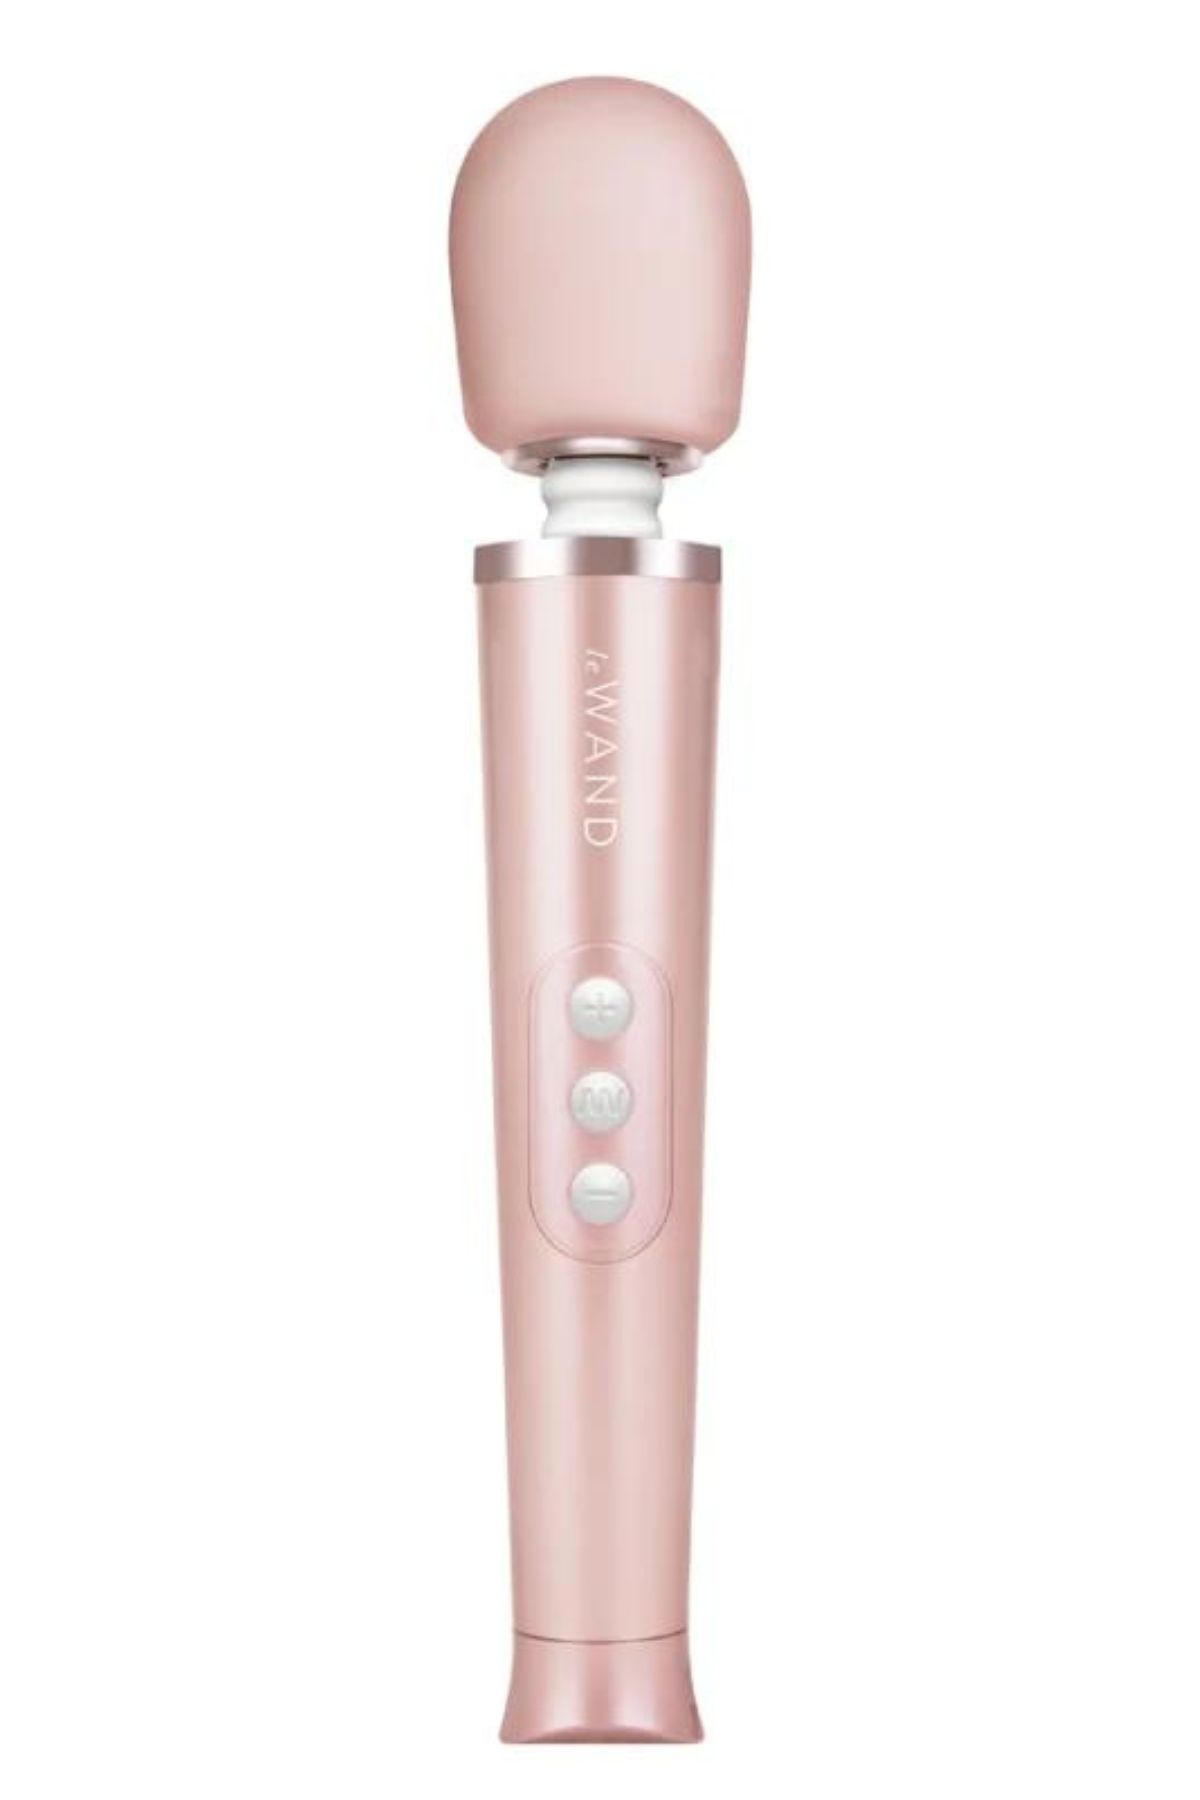 rose gold wand vibrator